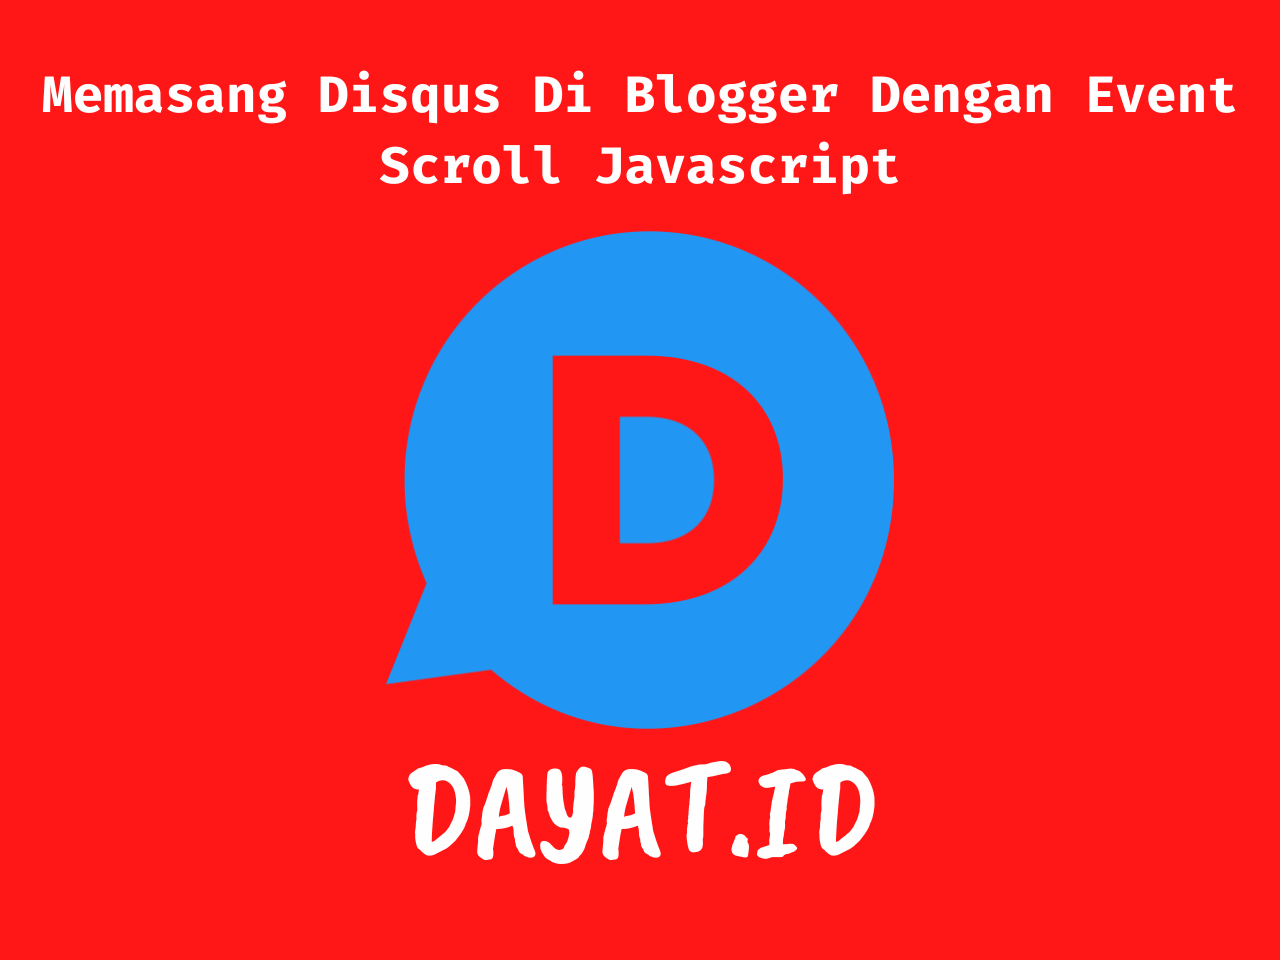 Memasang disqus di blogger menggunakan event scroll javascript